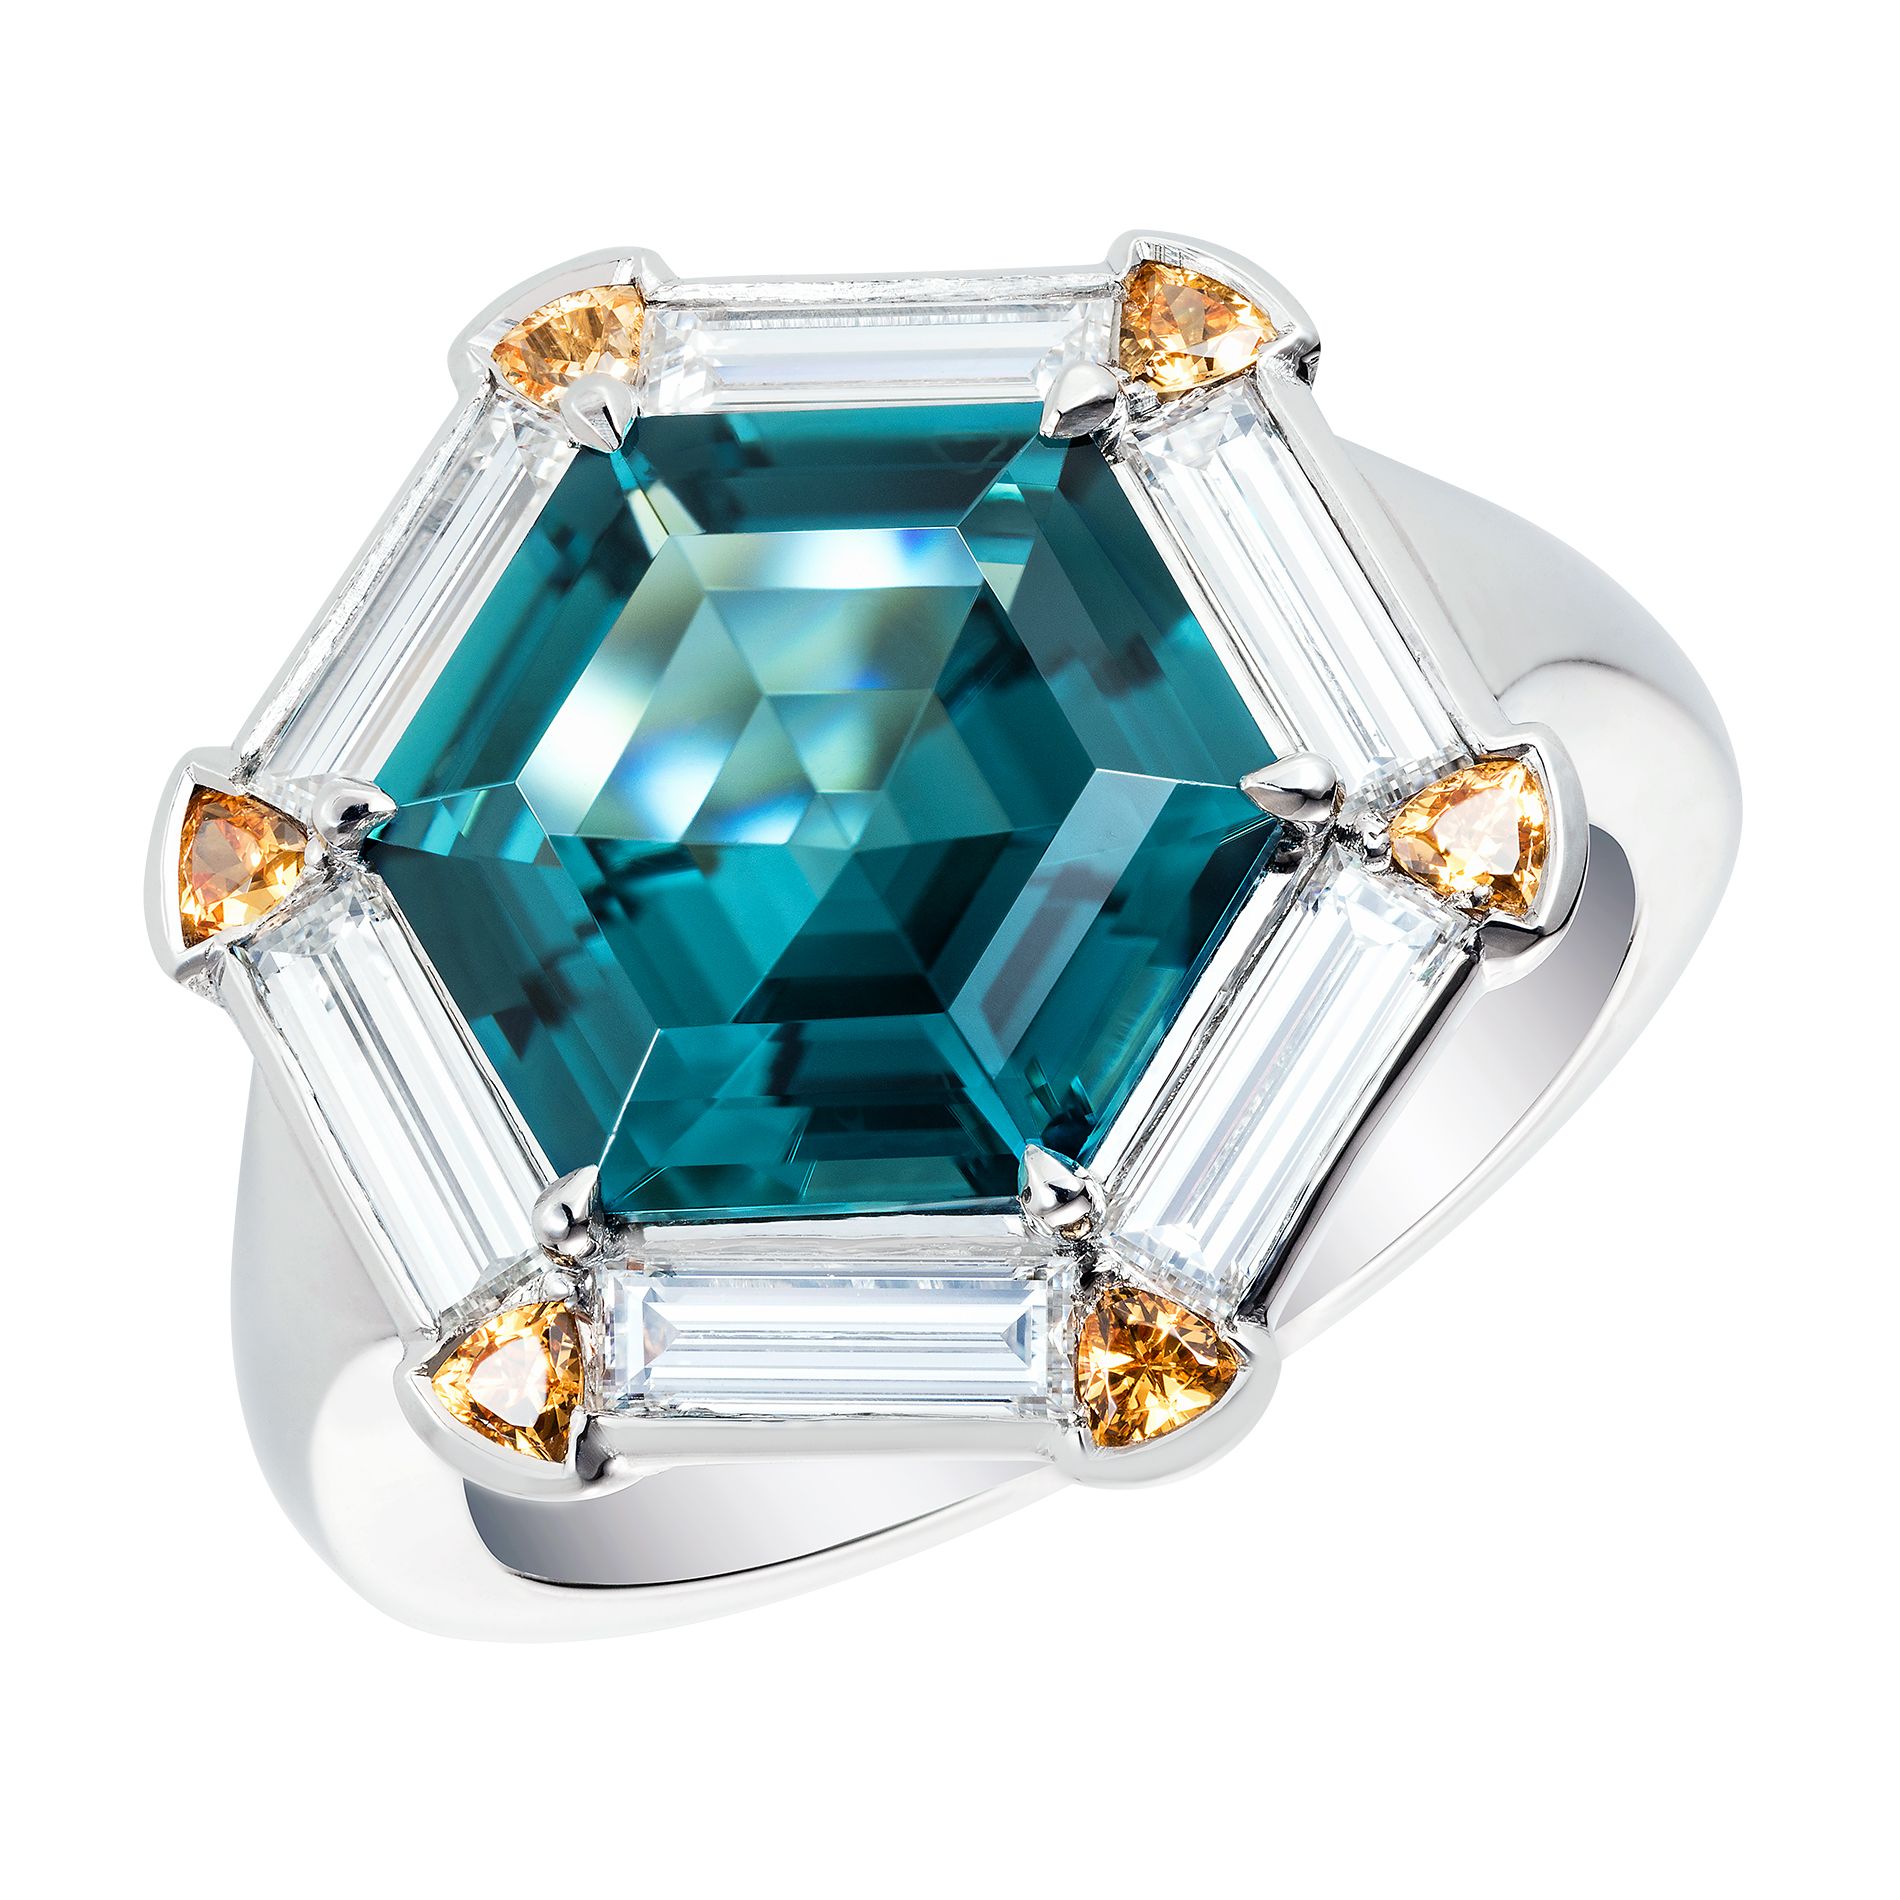 5.10 ct Indicolite Tourmaline Ring | Wabby's Jewels & Gems